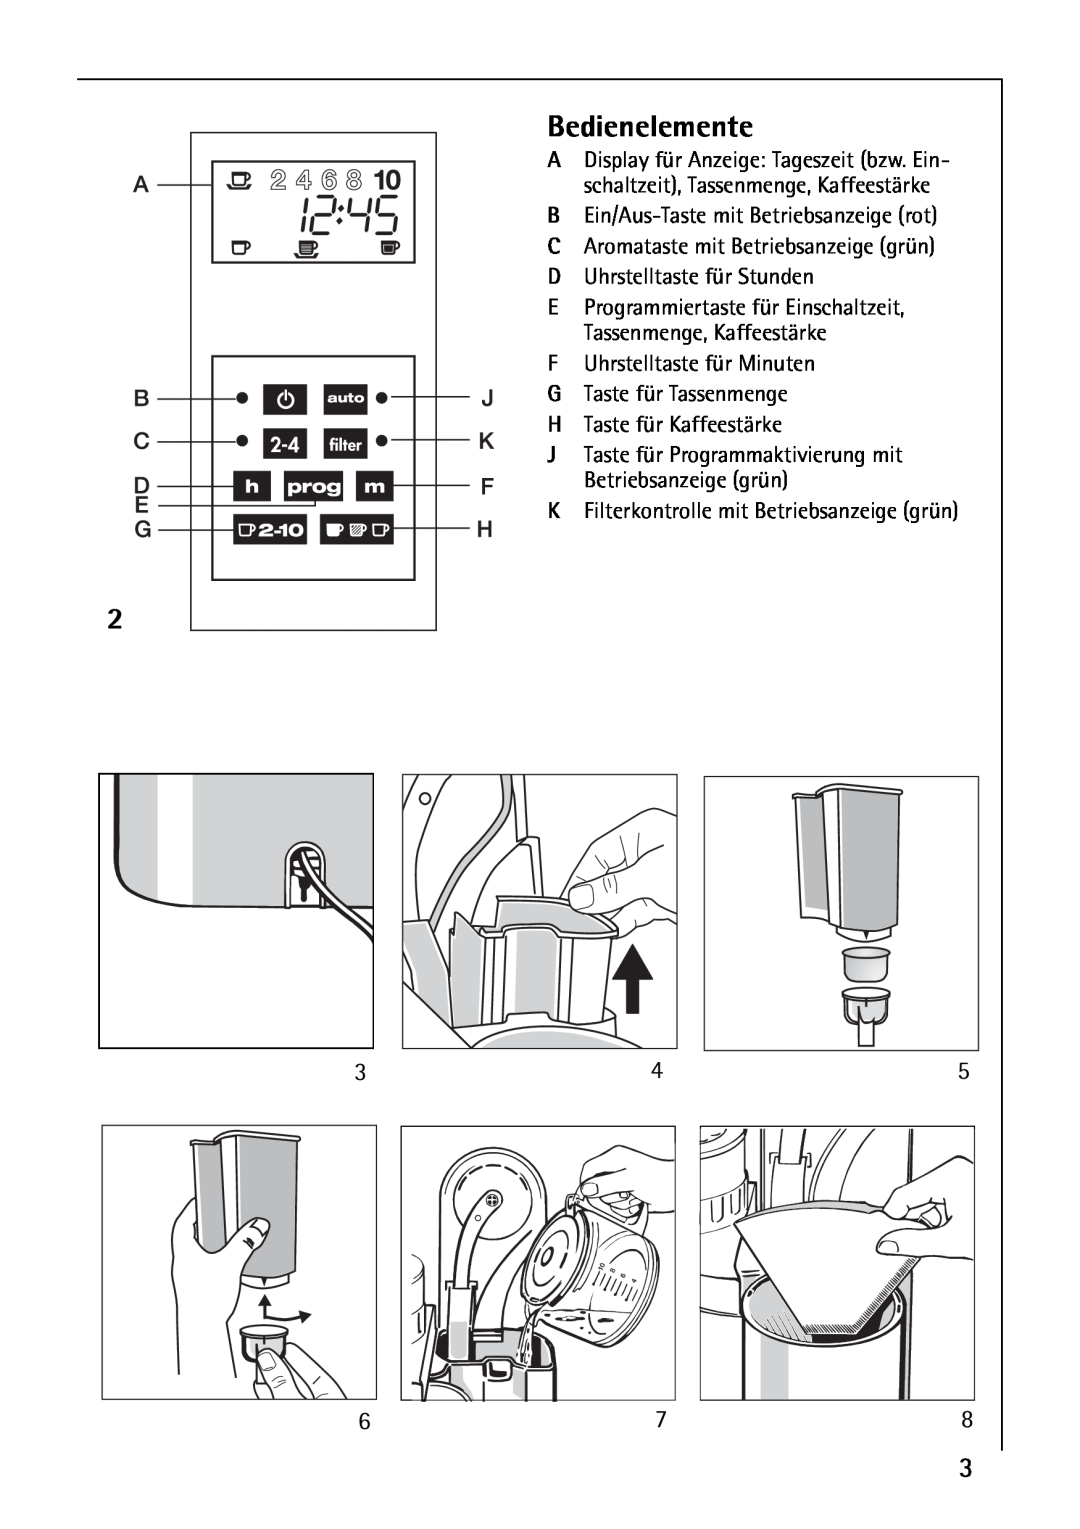 AEG KAM120 operating instructions Bedienelemente 